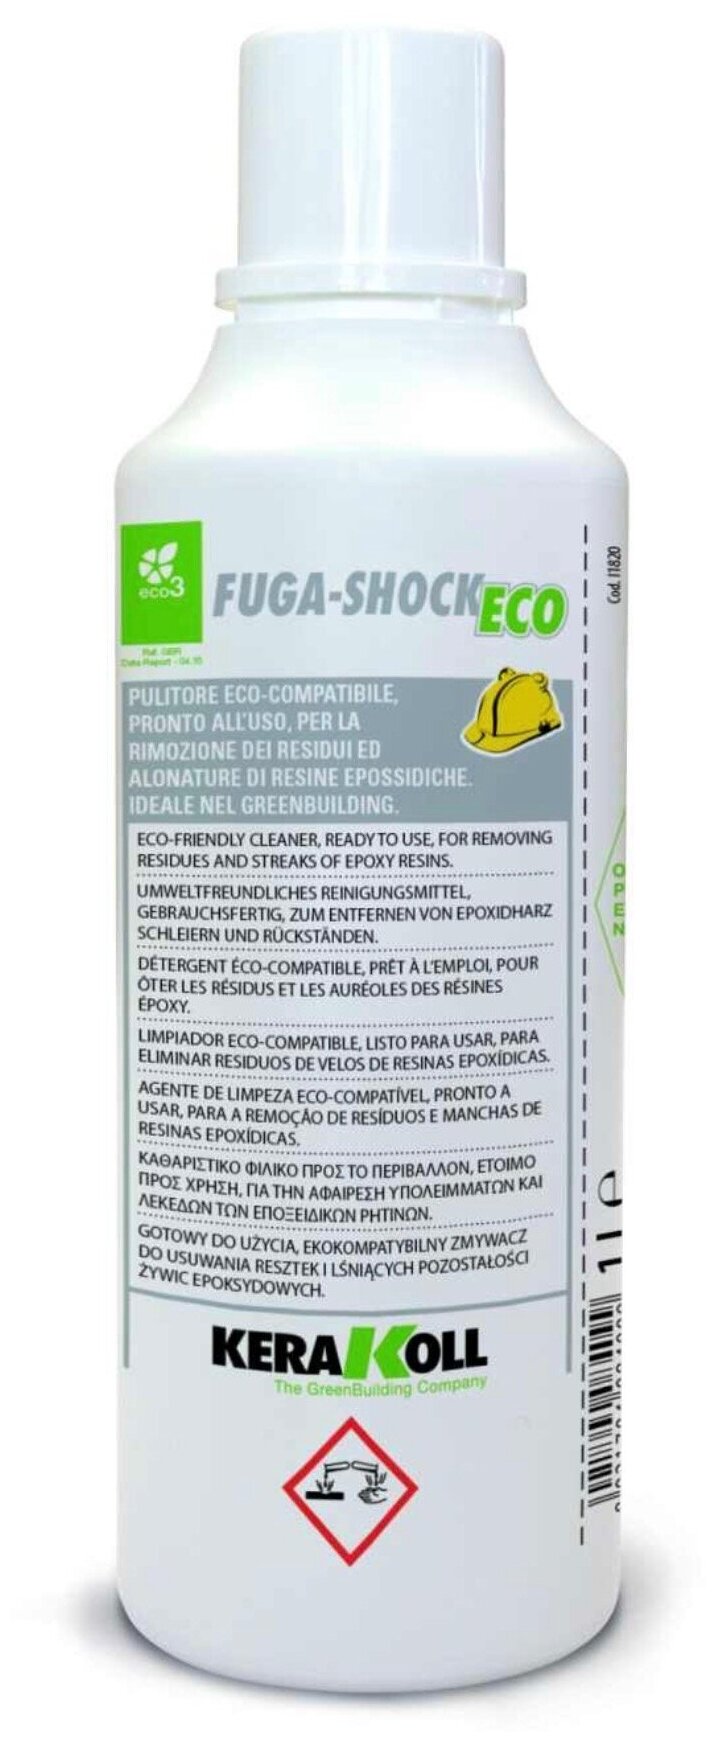 Kerakoll FUGA-SHOCK ECO экстра-смывка для эпоксидной затирки Fugalite Eco 1л.